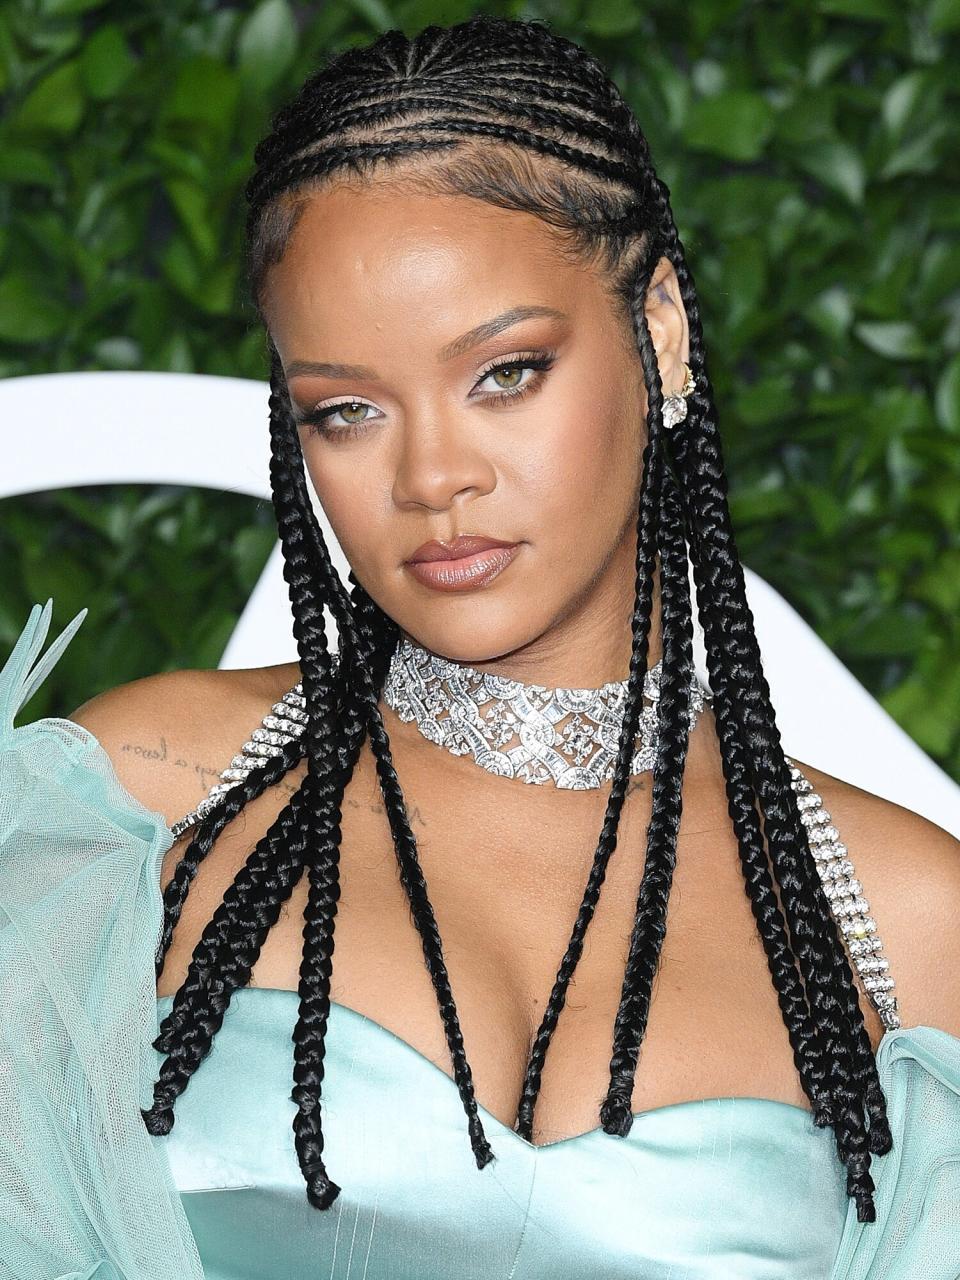 Rihanna arrives at The Fashion Awards 2019 held at Royal Albert Hall on December 02, 2019 in London, England